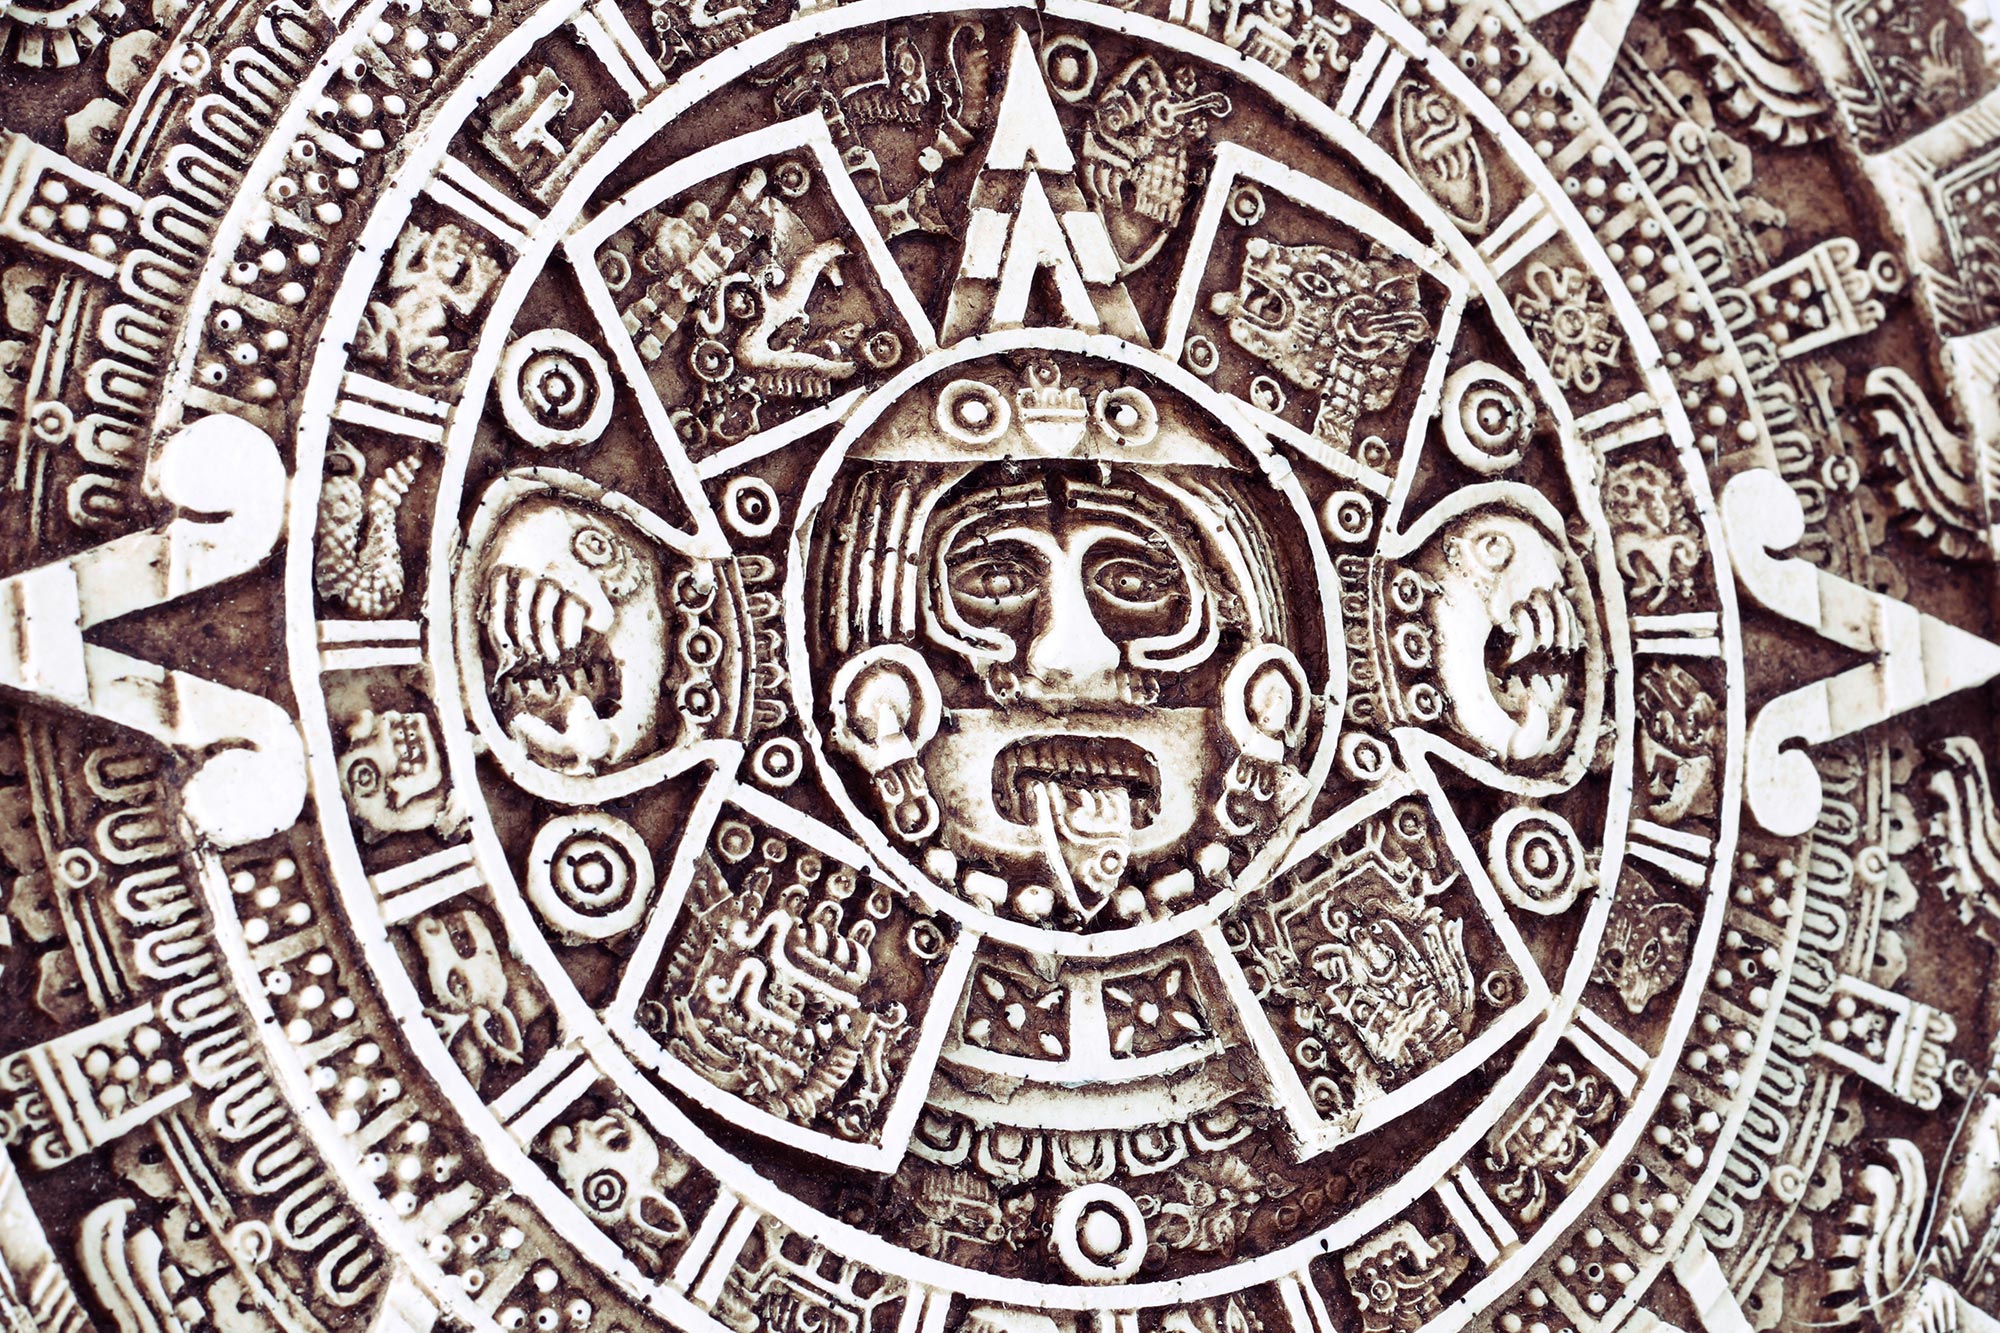 The Mayan Calendar